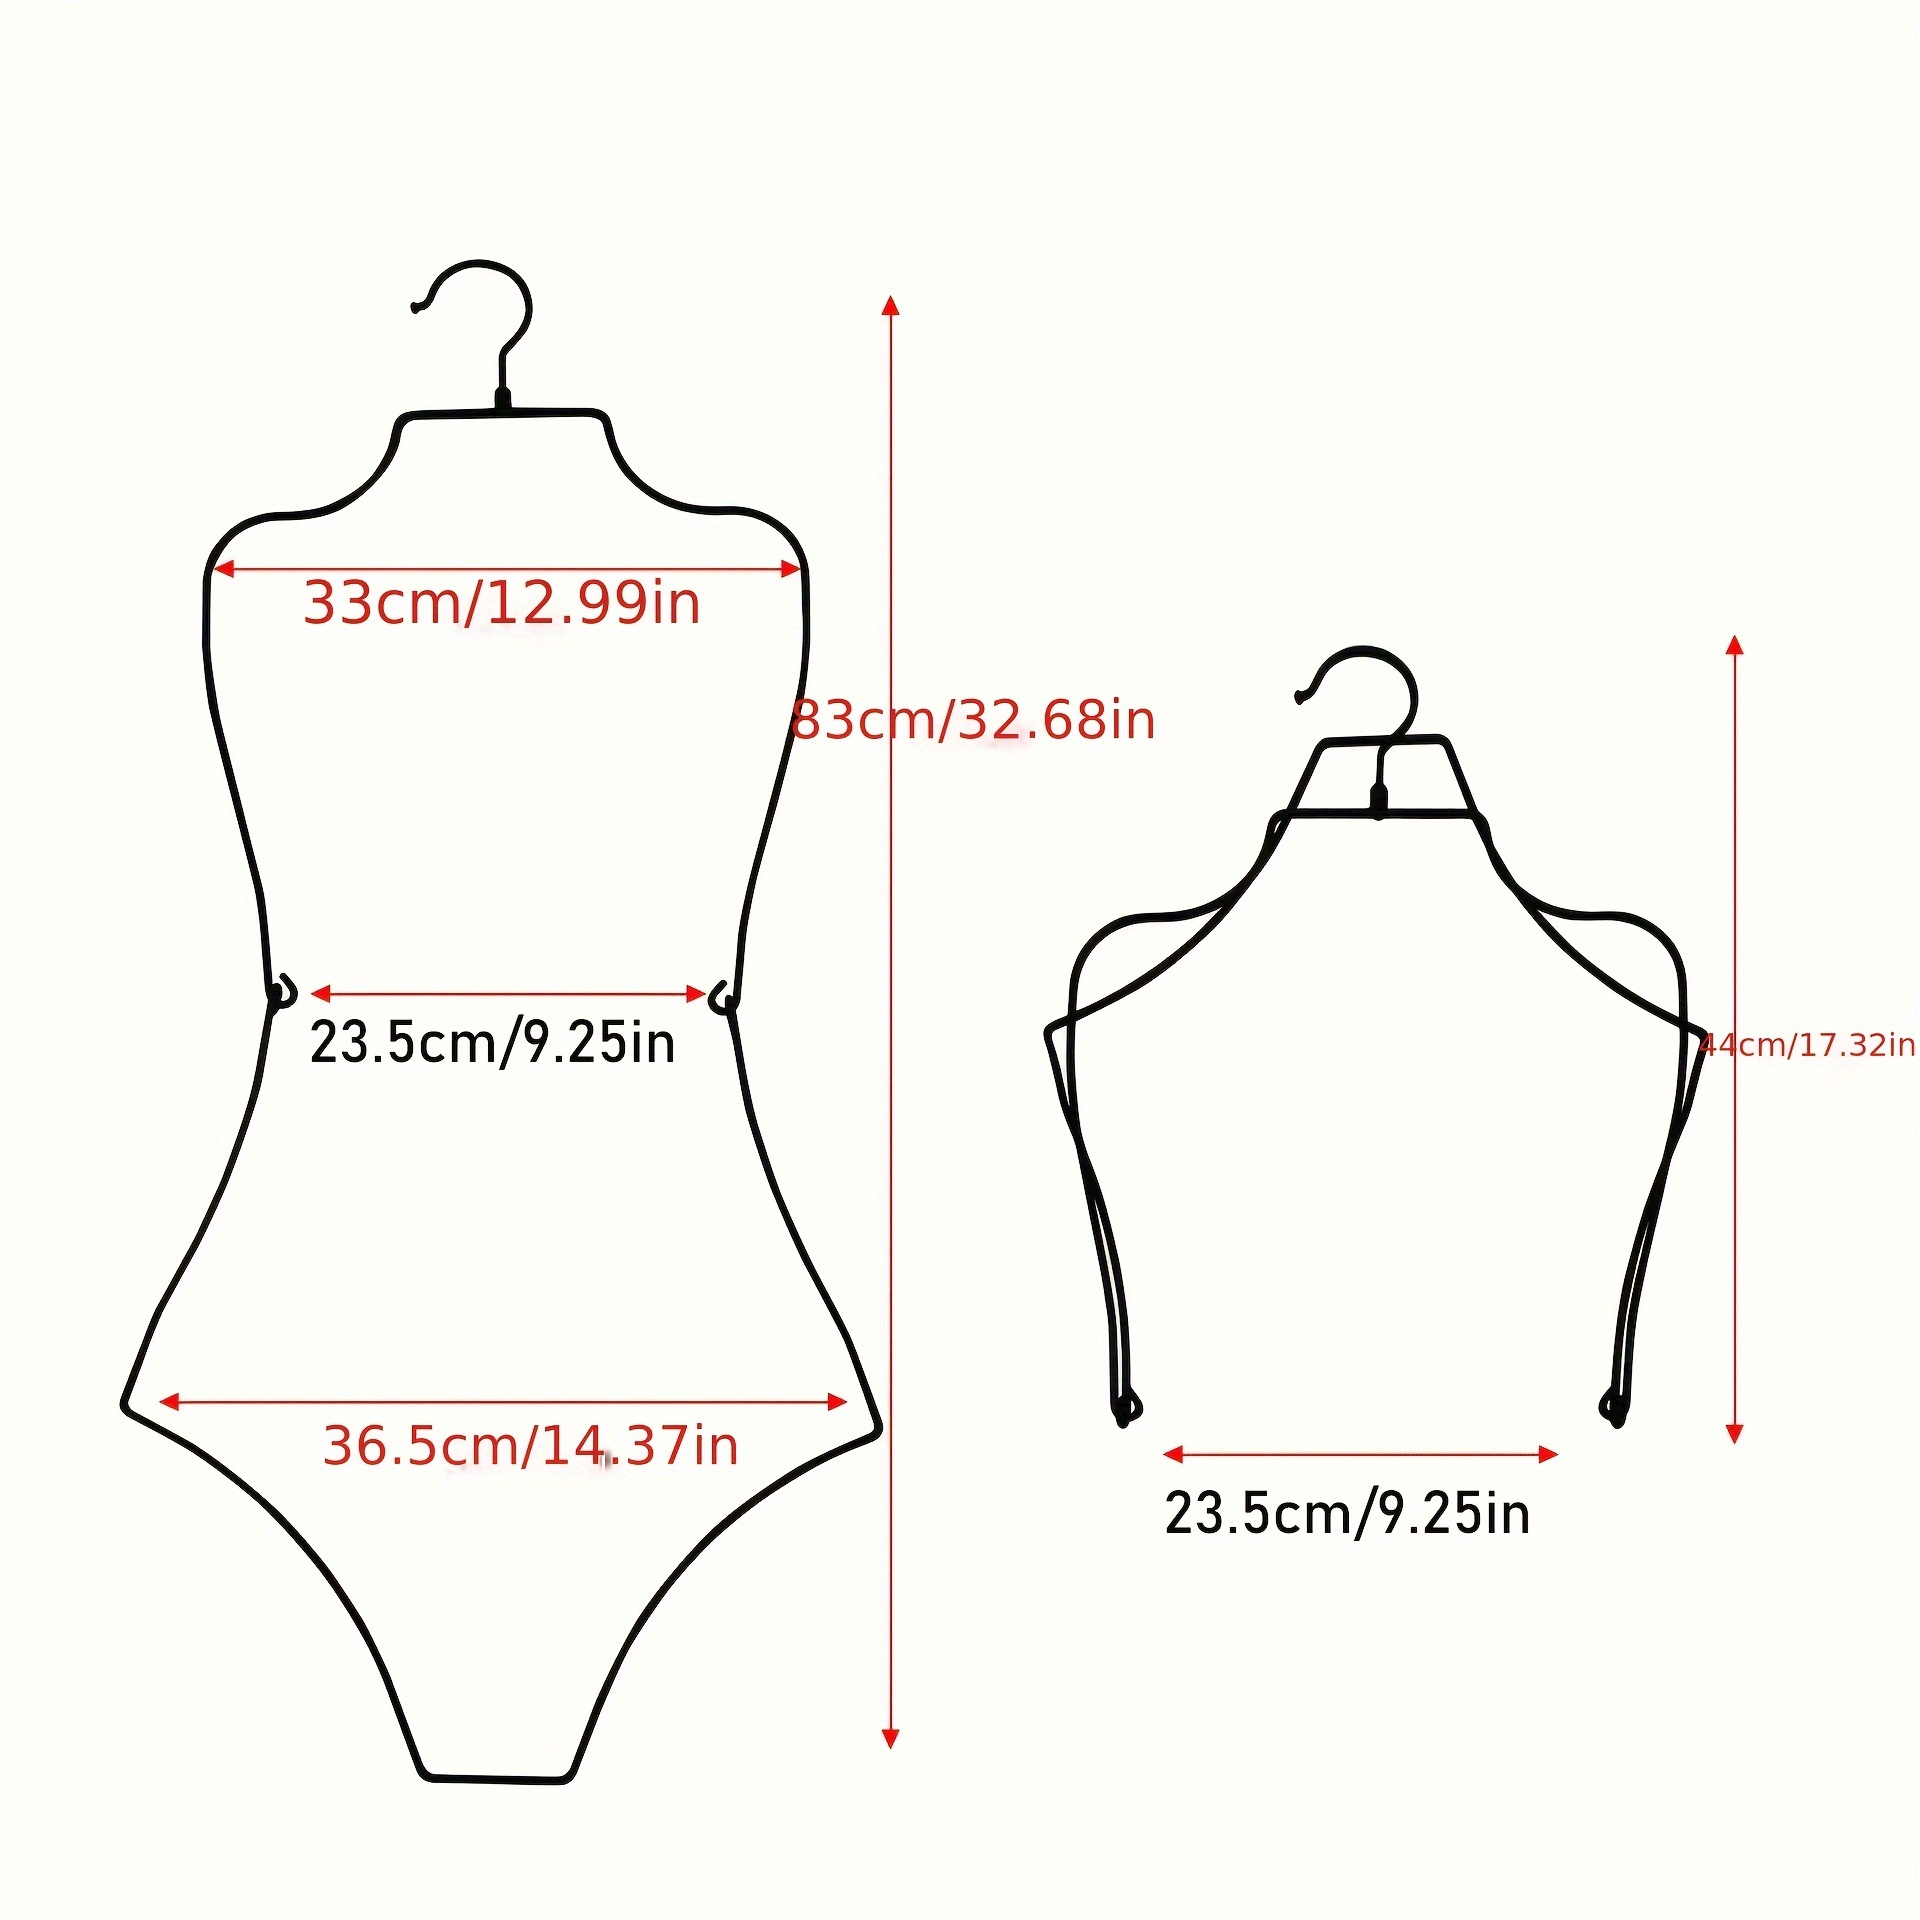 Top Swivel Hook Foldable Design Swimsuit Hanger Bathing Suit Body